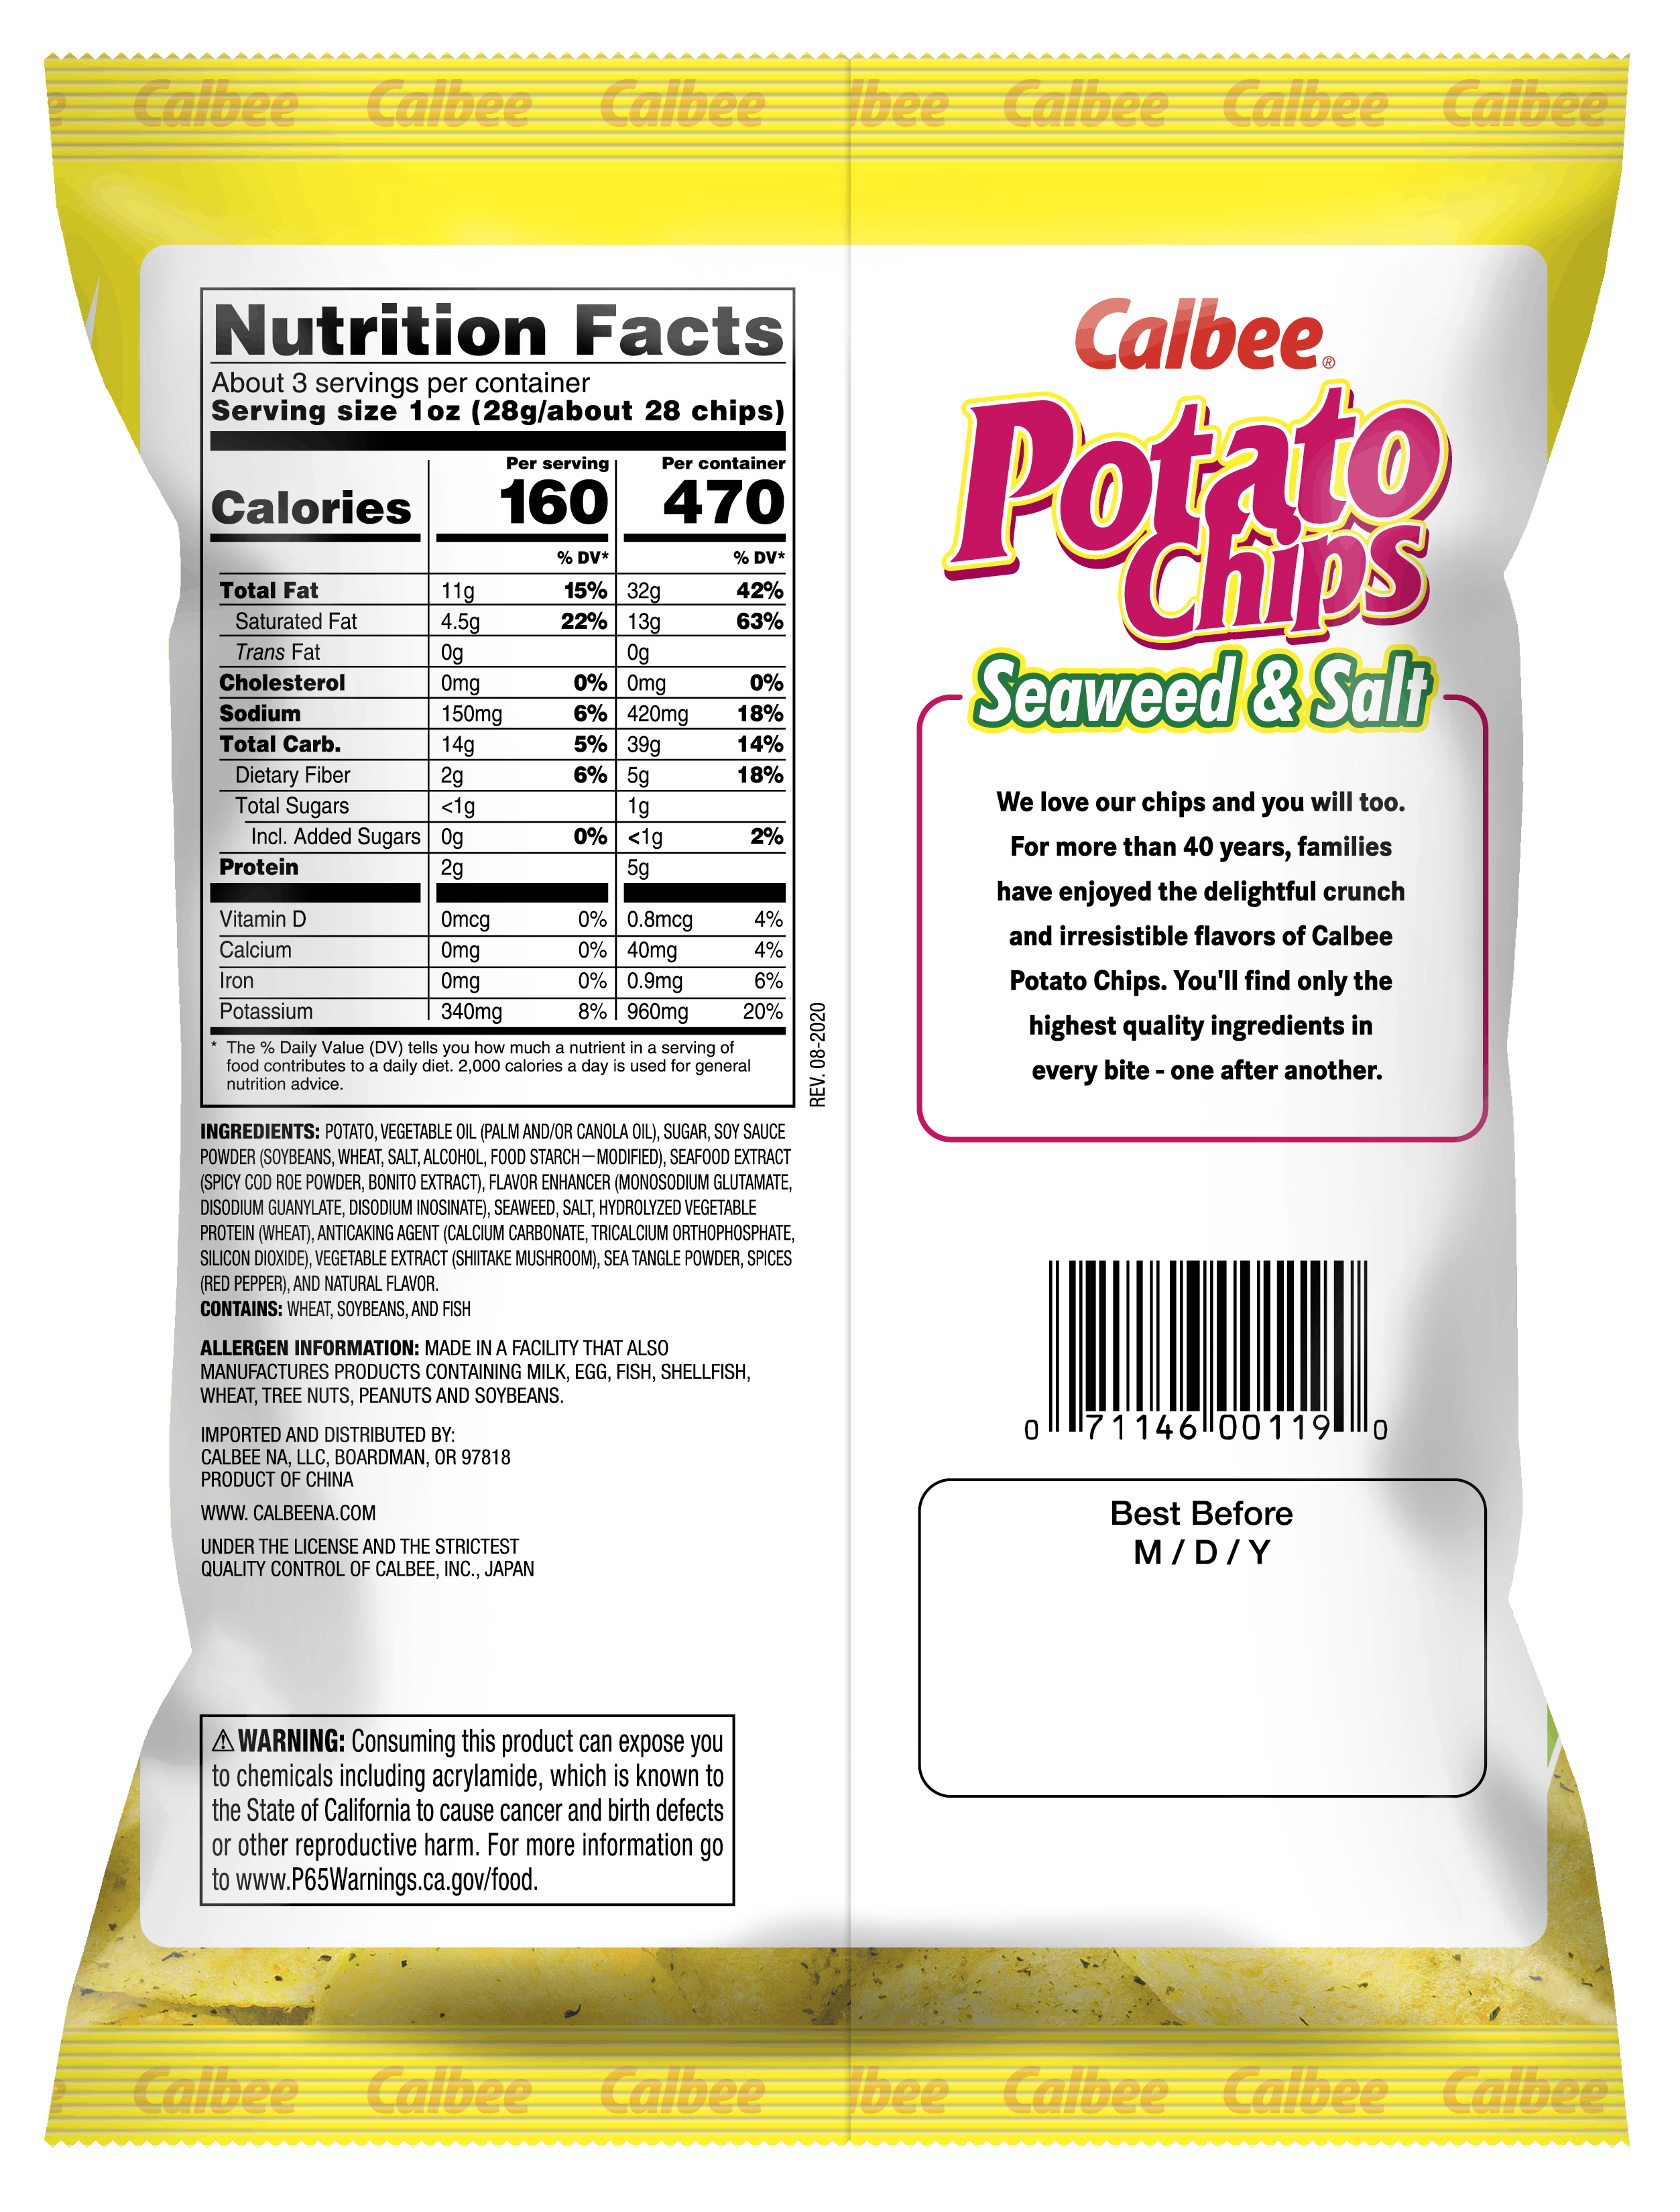 Calbee Potato Chips - Seaweed & Salt - Back of Bag